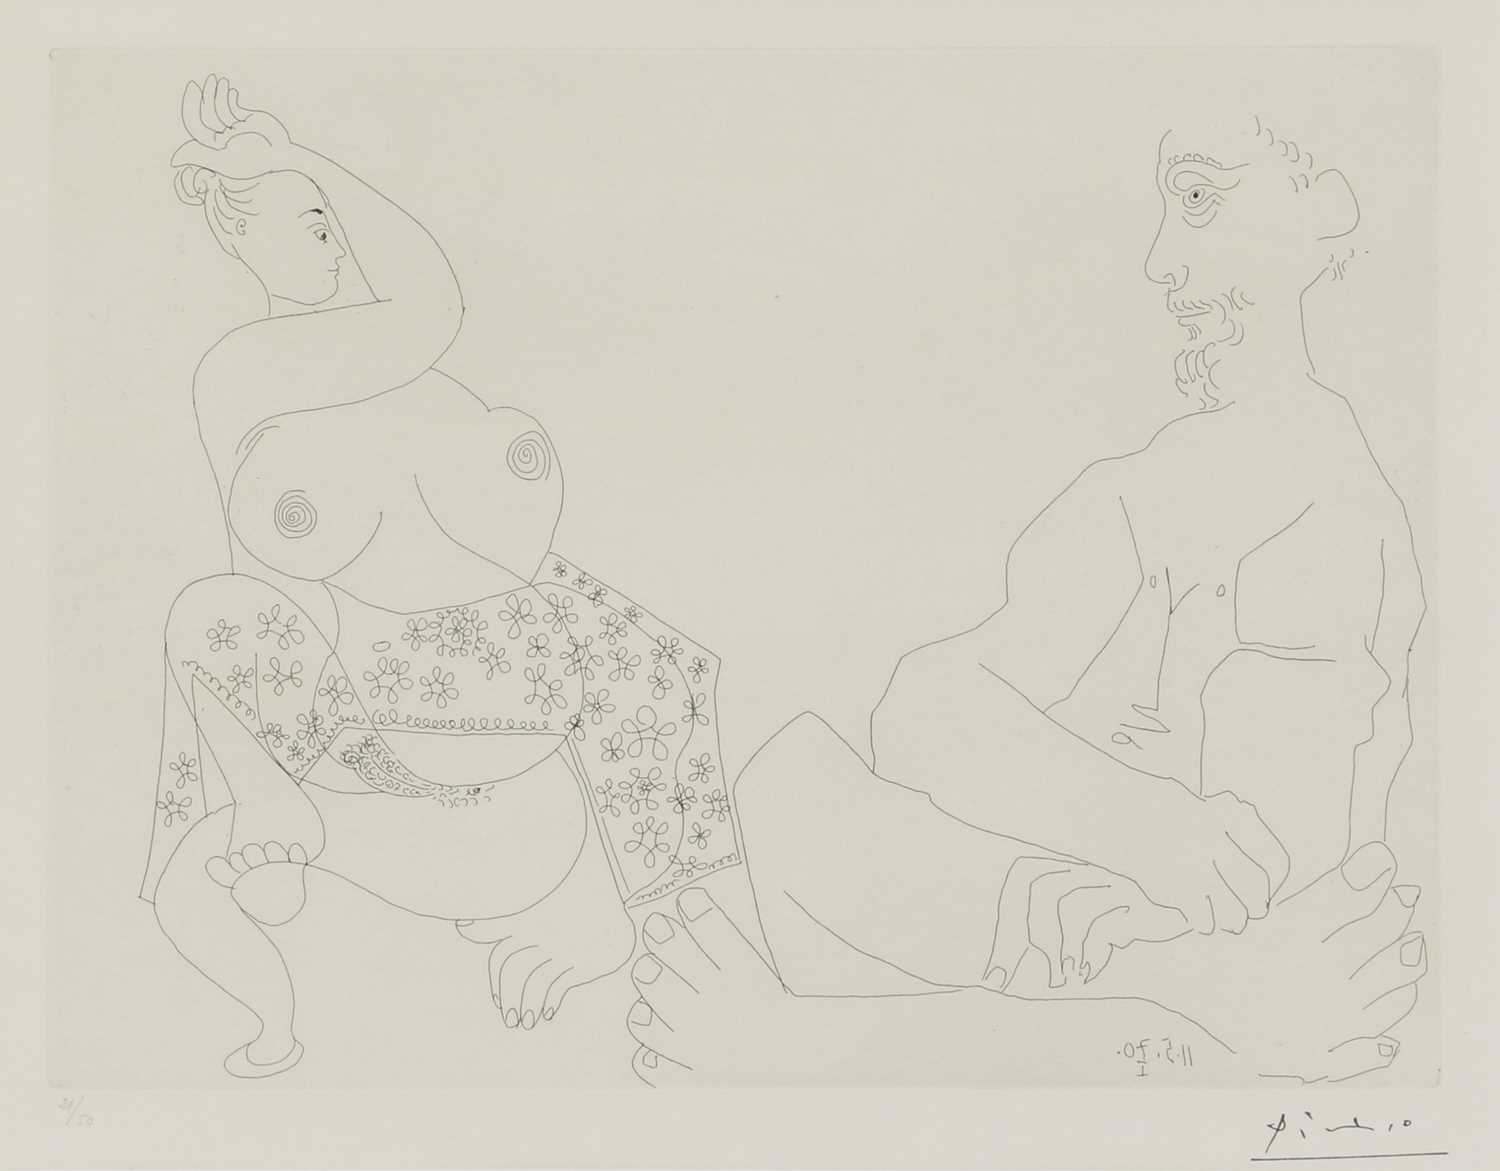 Lot 102 - Pablo Picasso (Spanish, 1881-1973)